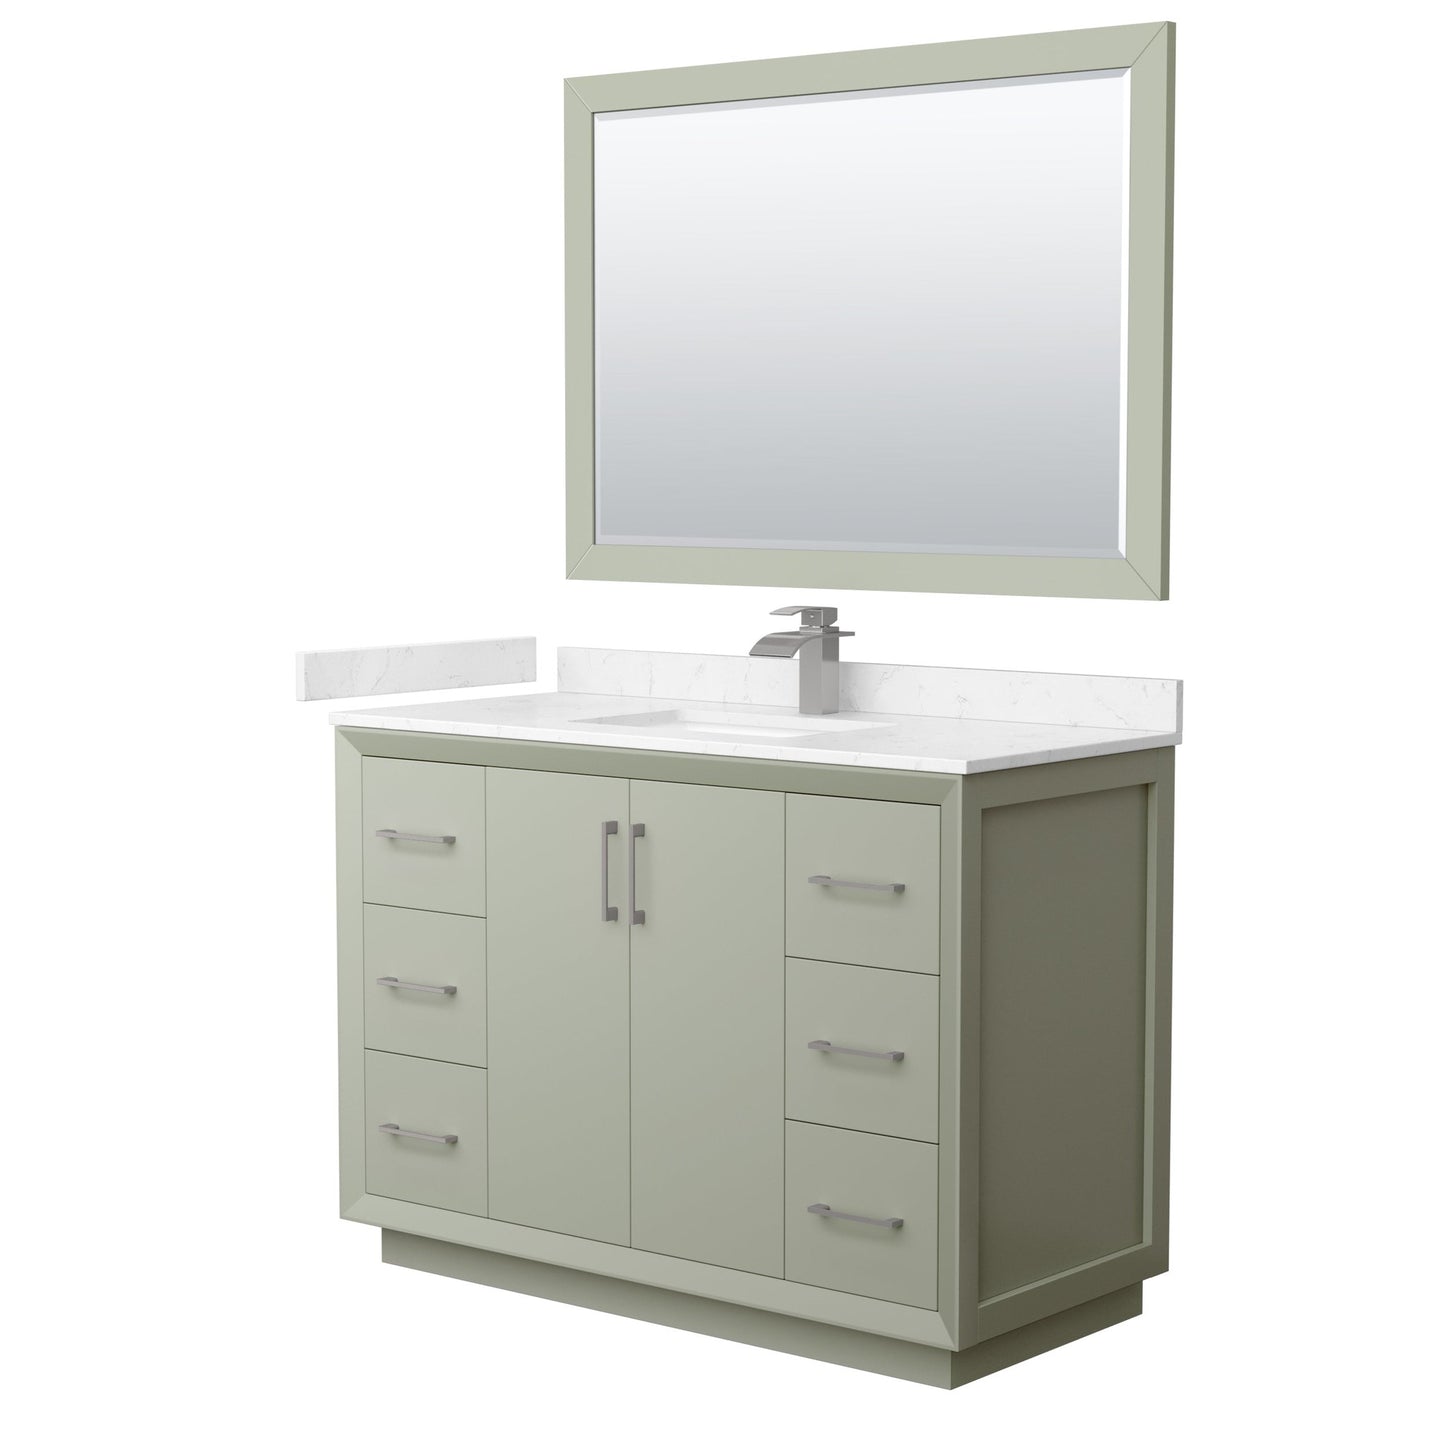 Wyndham Collection Strada 48" Single Bathroom Vanity in Light Green, Carrara Cultured Marble Countertop, Undermount Square Sink, Brushed Nickel Trim, 46" Mirror